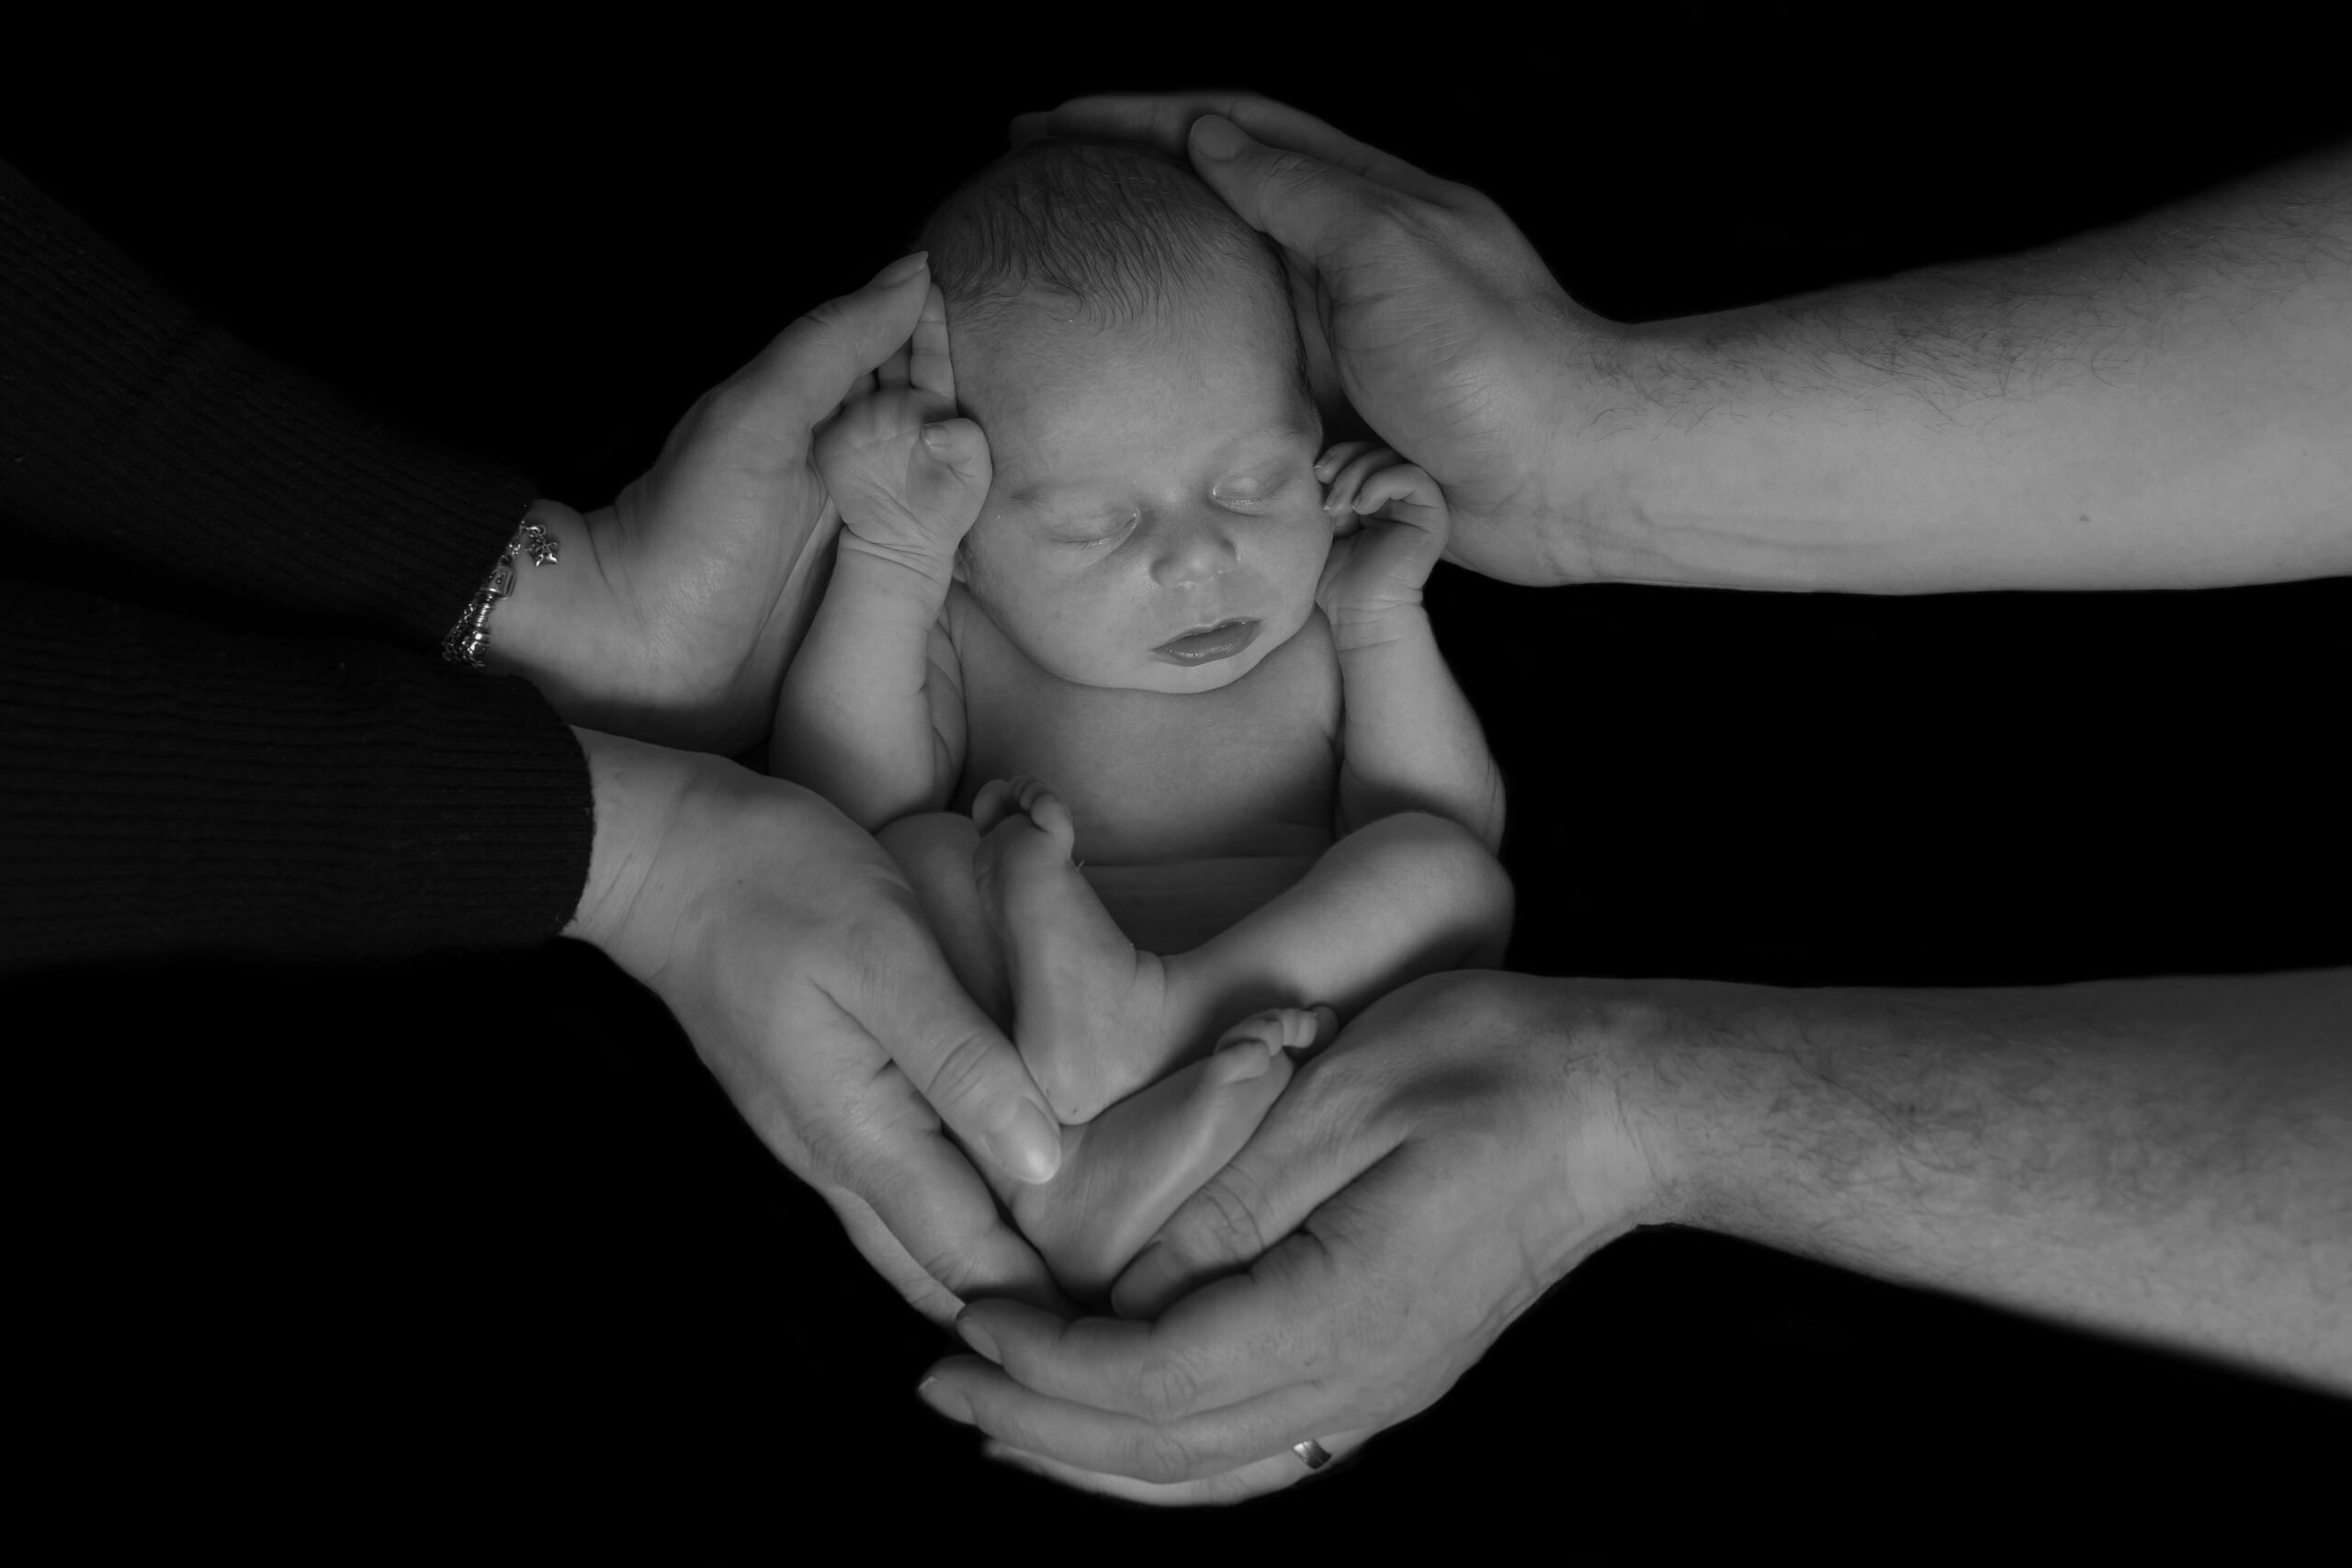 Black & White Newborn Photography - by Emma Lowe Photography